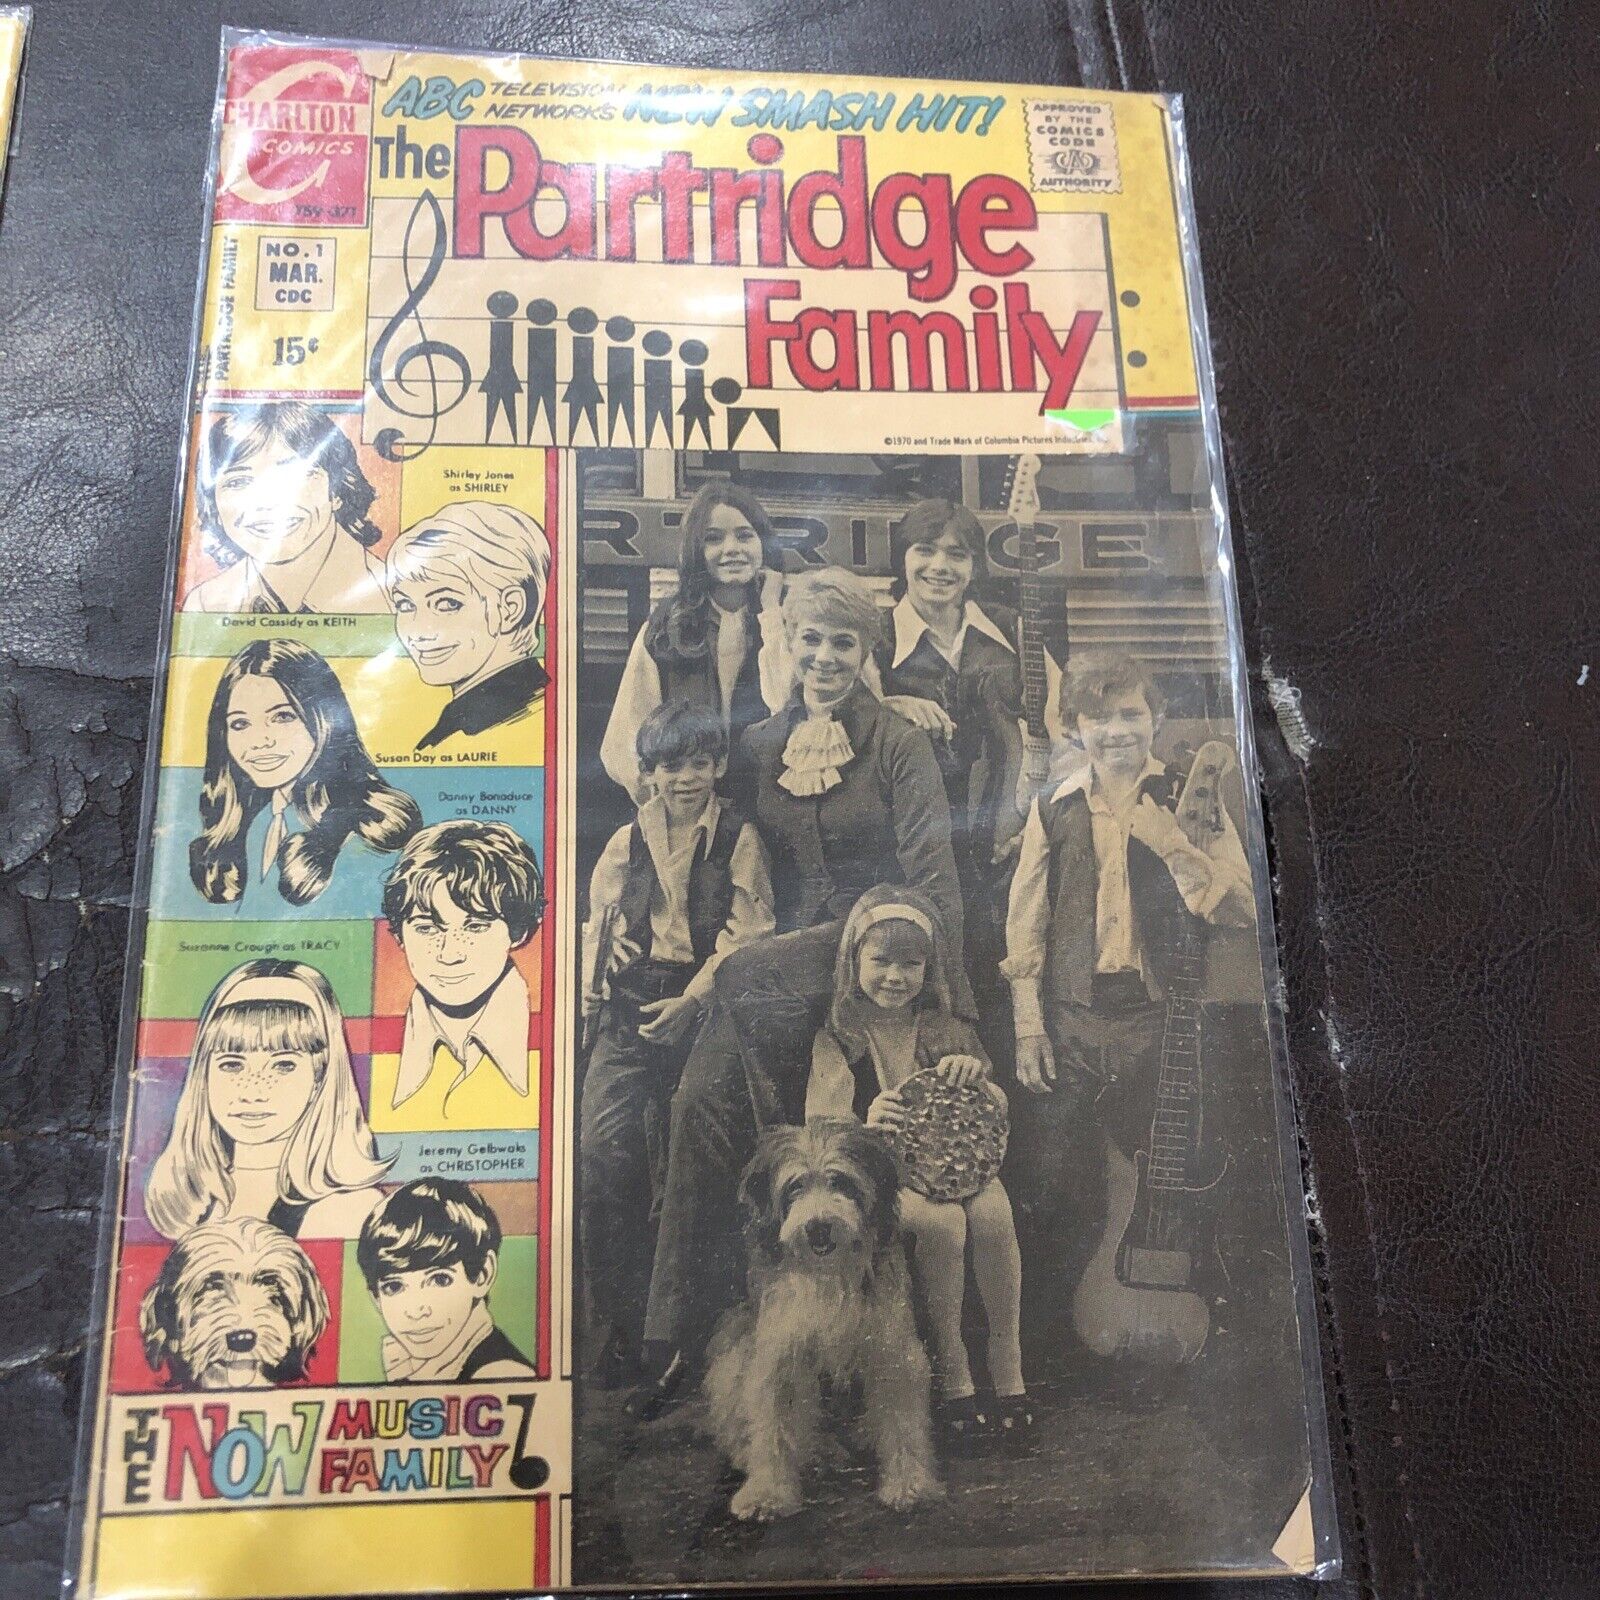 PARTRIDGE FAMILY #1  PHOTO COVER  DAVID CASSIDY ABC TV * CHARLTON  1971  NICE